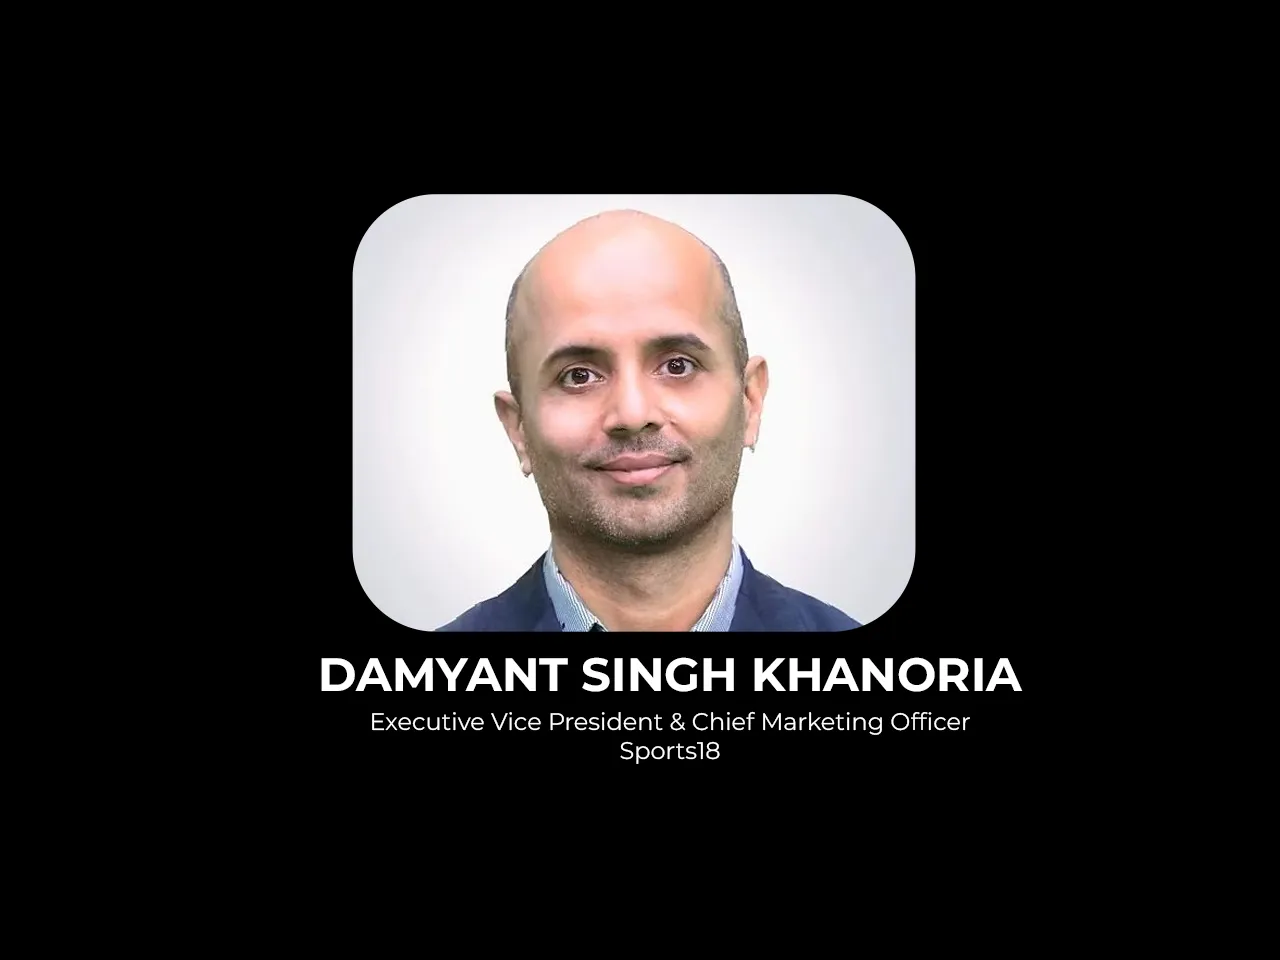 Damyant Singh Khanoria